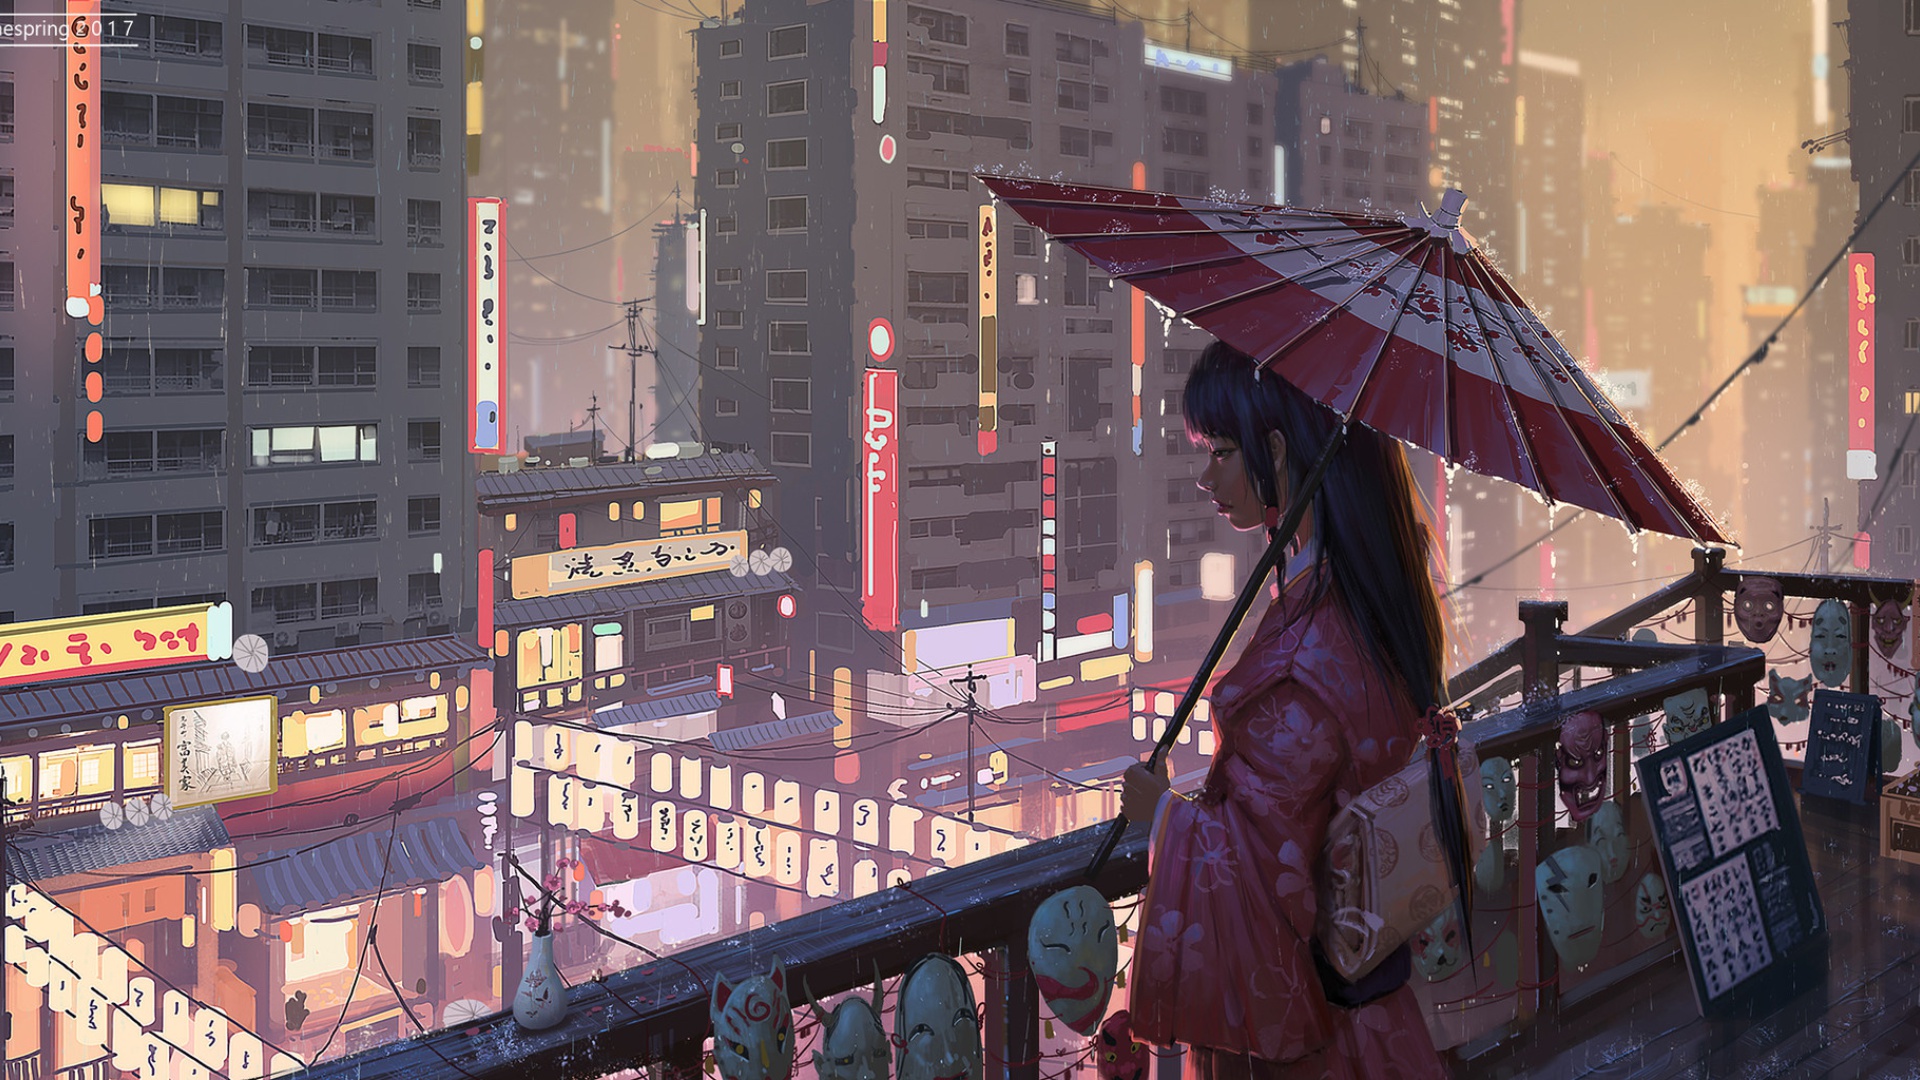 Admiring the city on a rainy day by luzhan liu